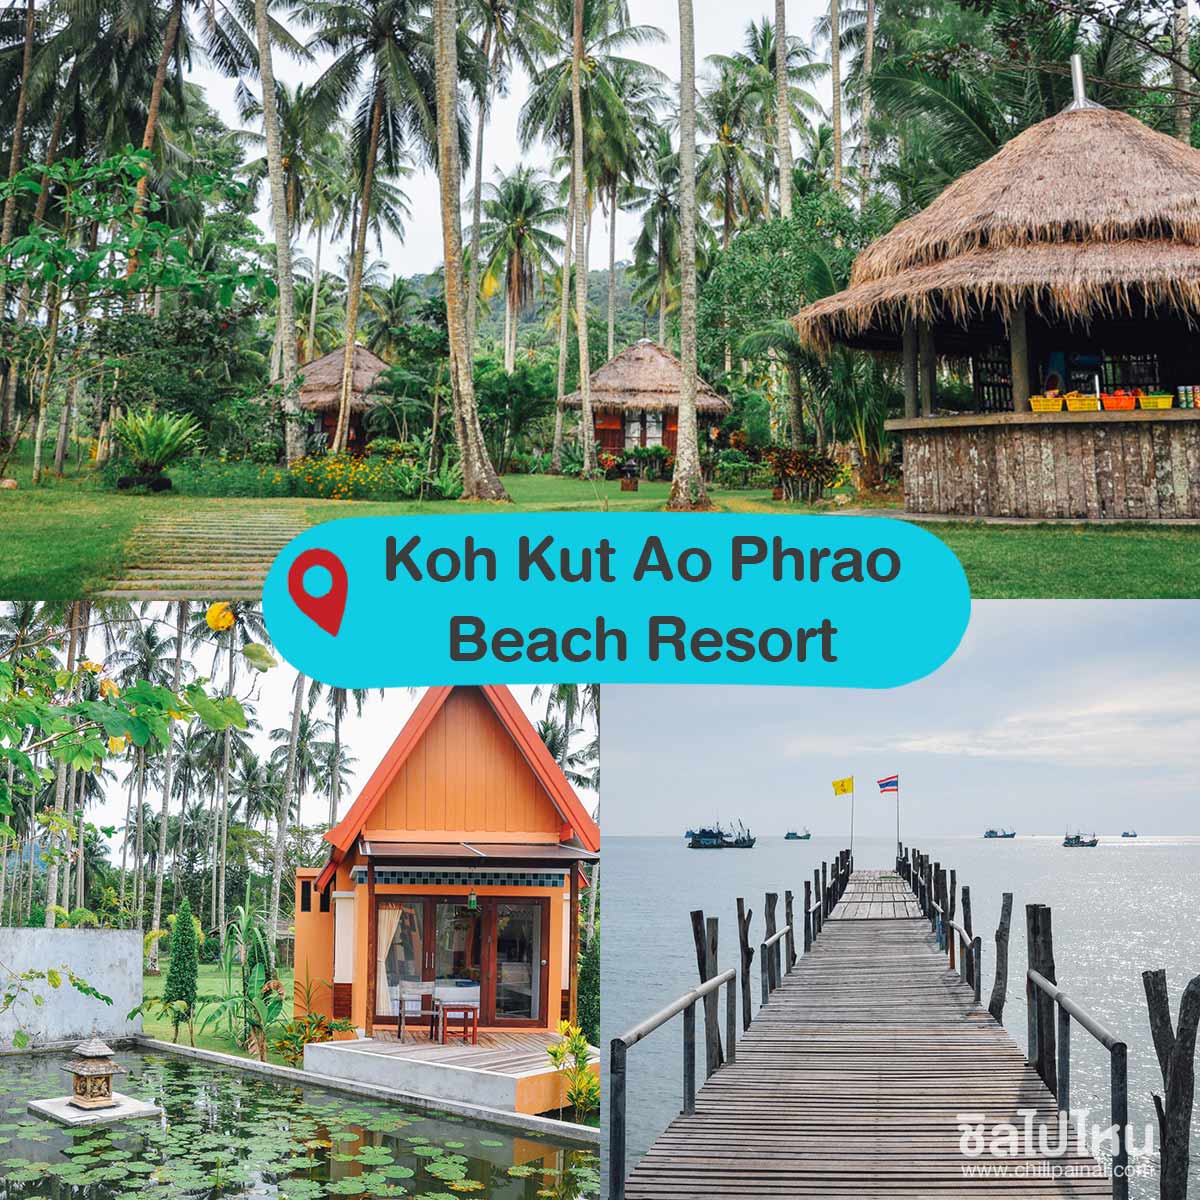 Koh Kut Ao Phrao Beach Resort - ที่พักเกาะกูด (เกาะกูด อ่าวพร้าว บีช รีสอร์ท)